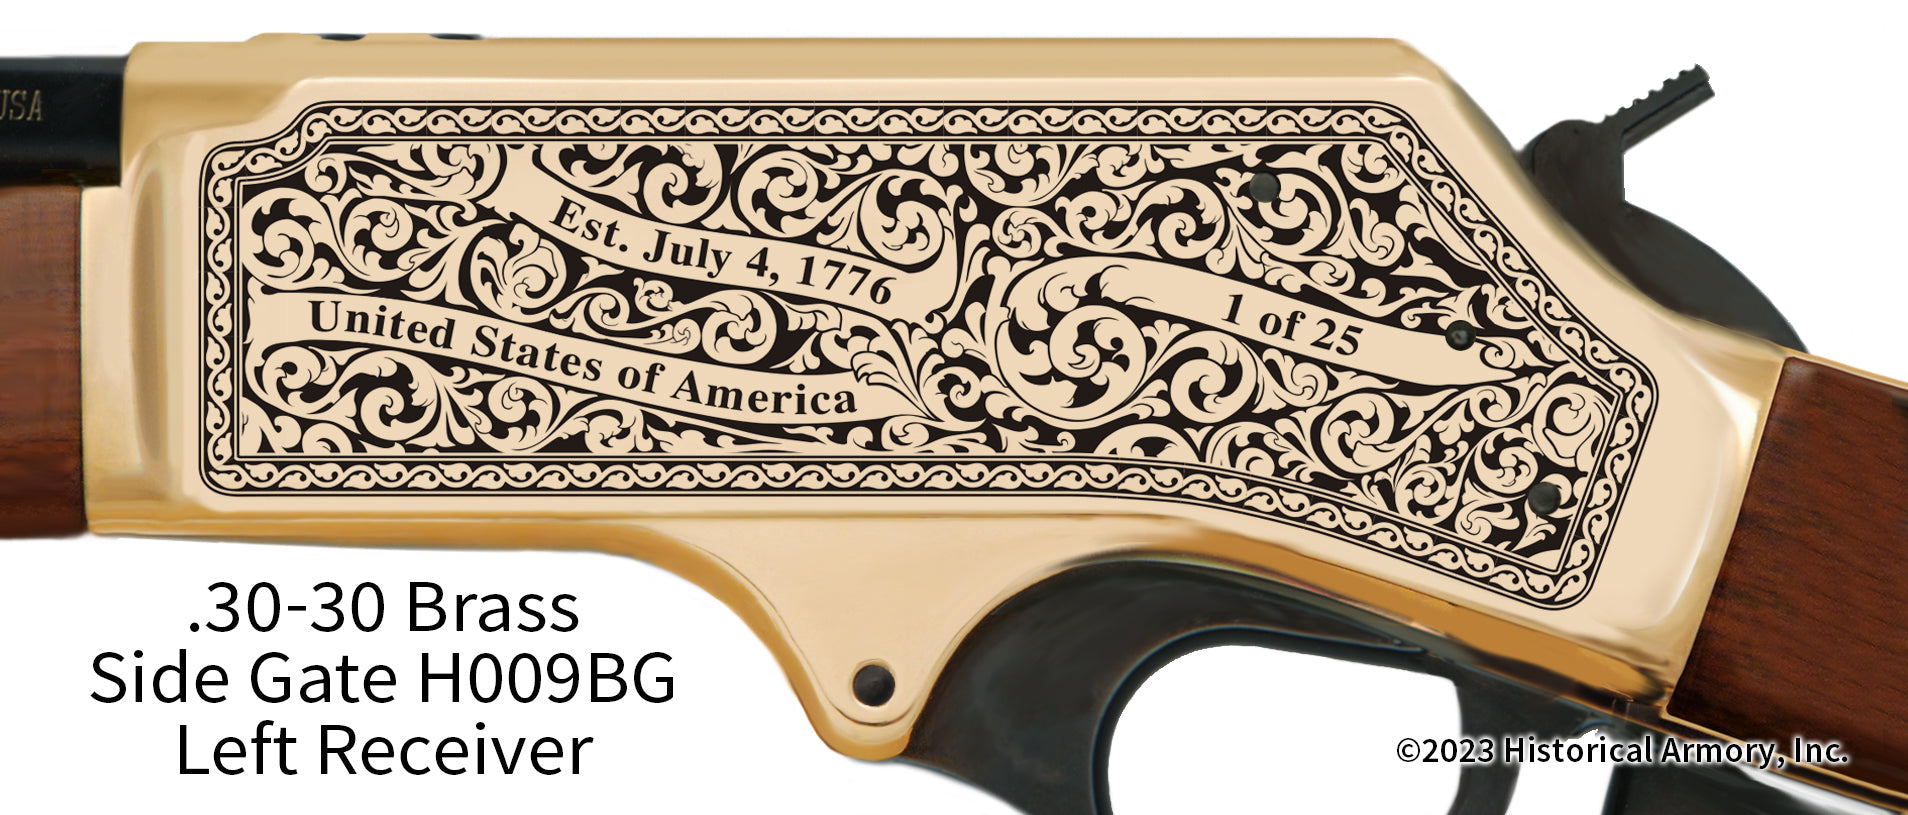 Saunders County Nebraska Engraved Henry .30-30 Brass Side Gate Rifle